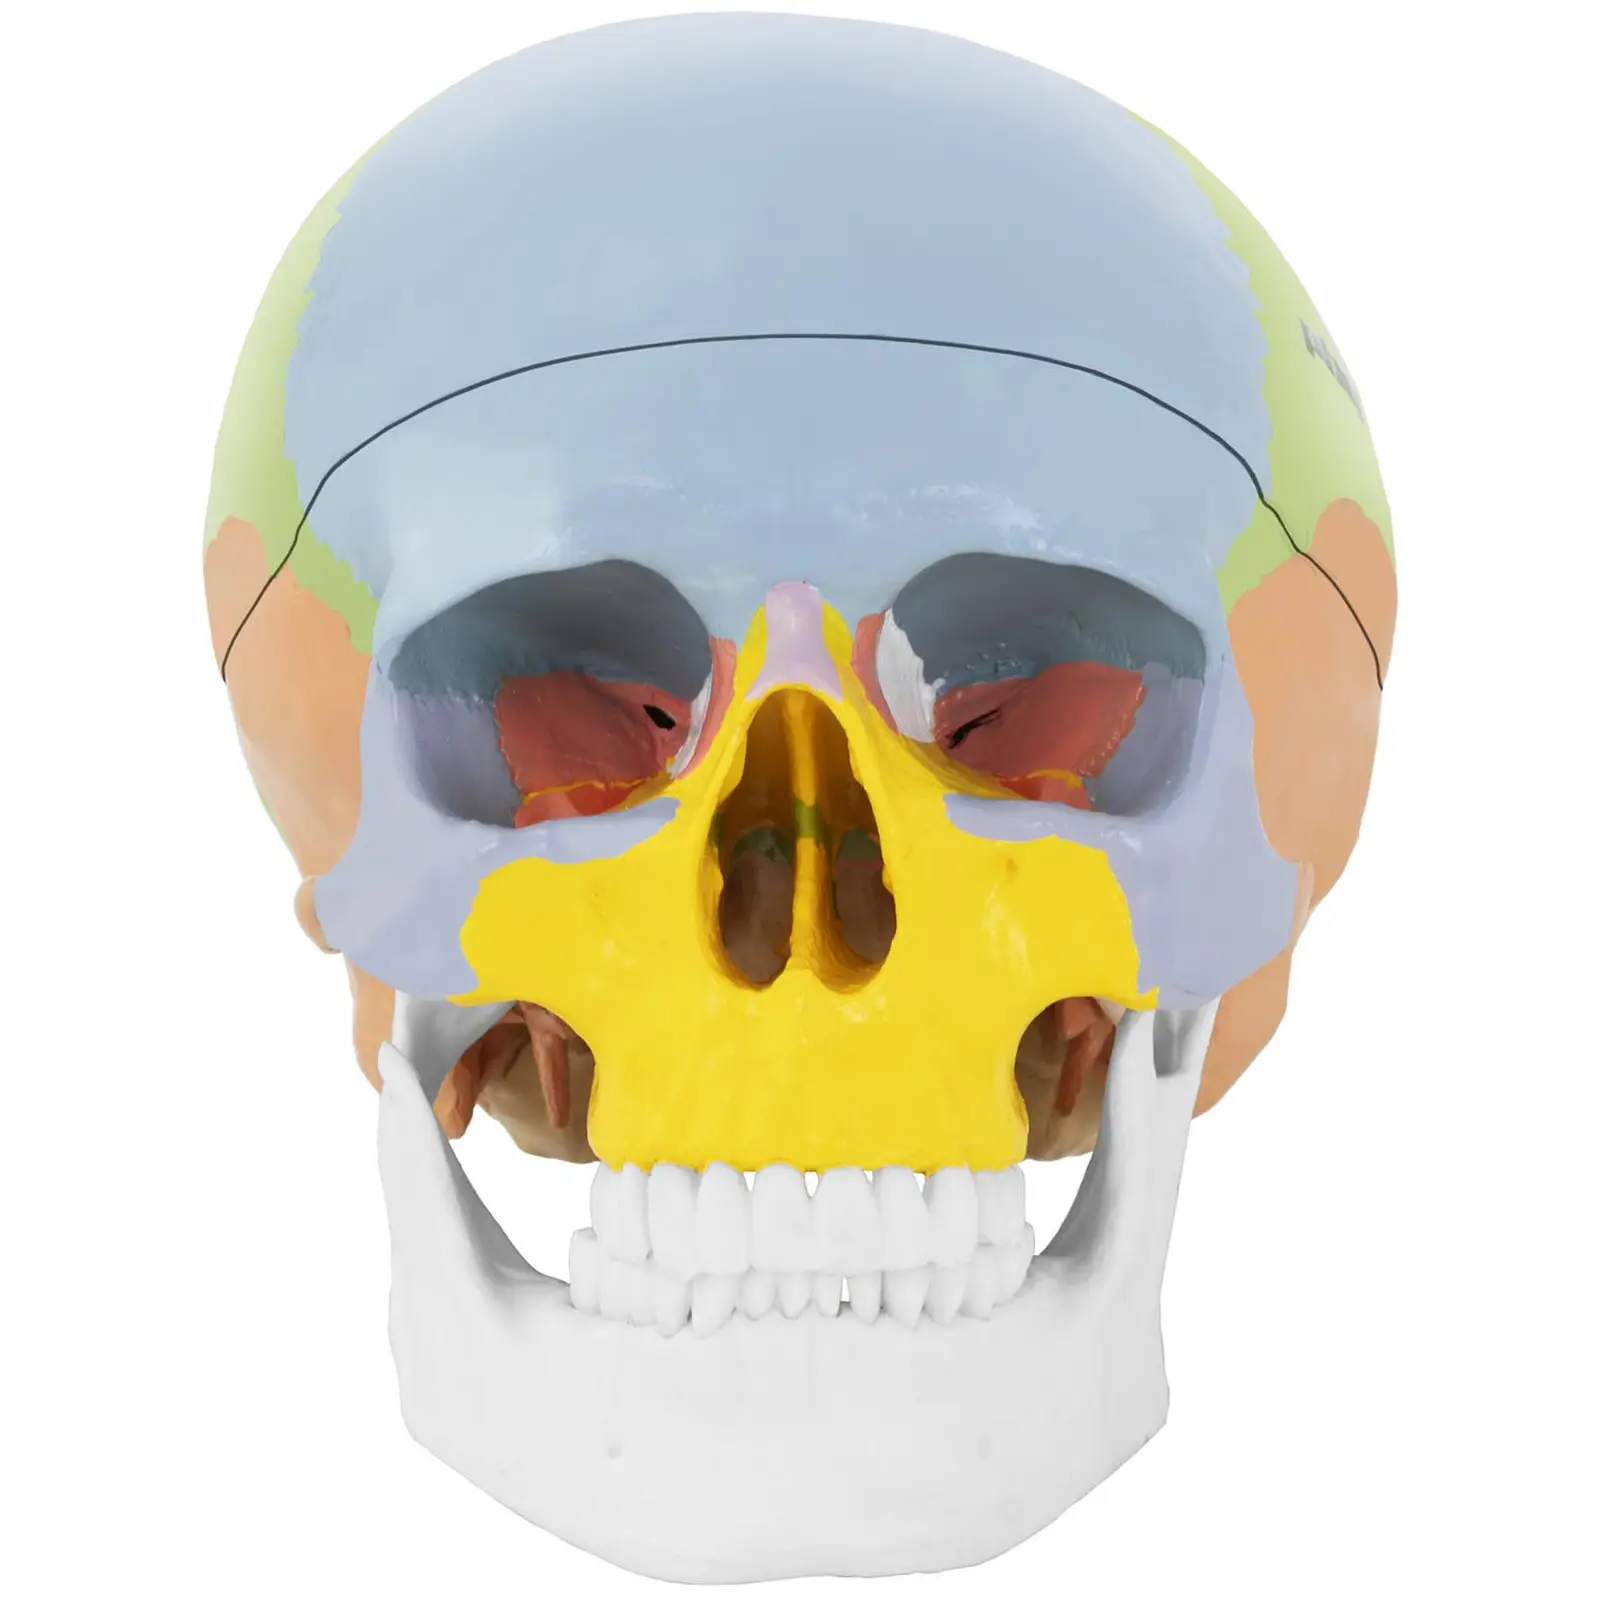 Illustration Anatomique Du Crâne Humain